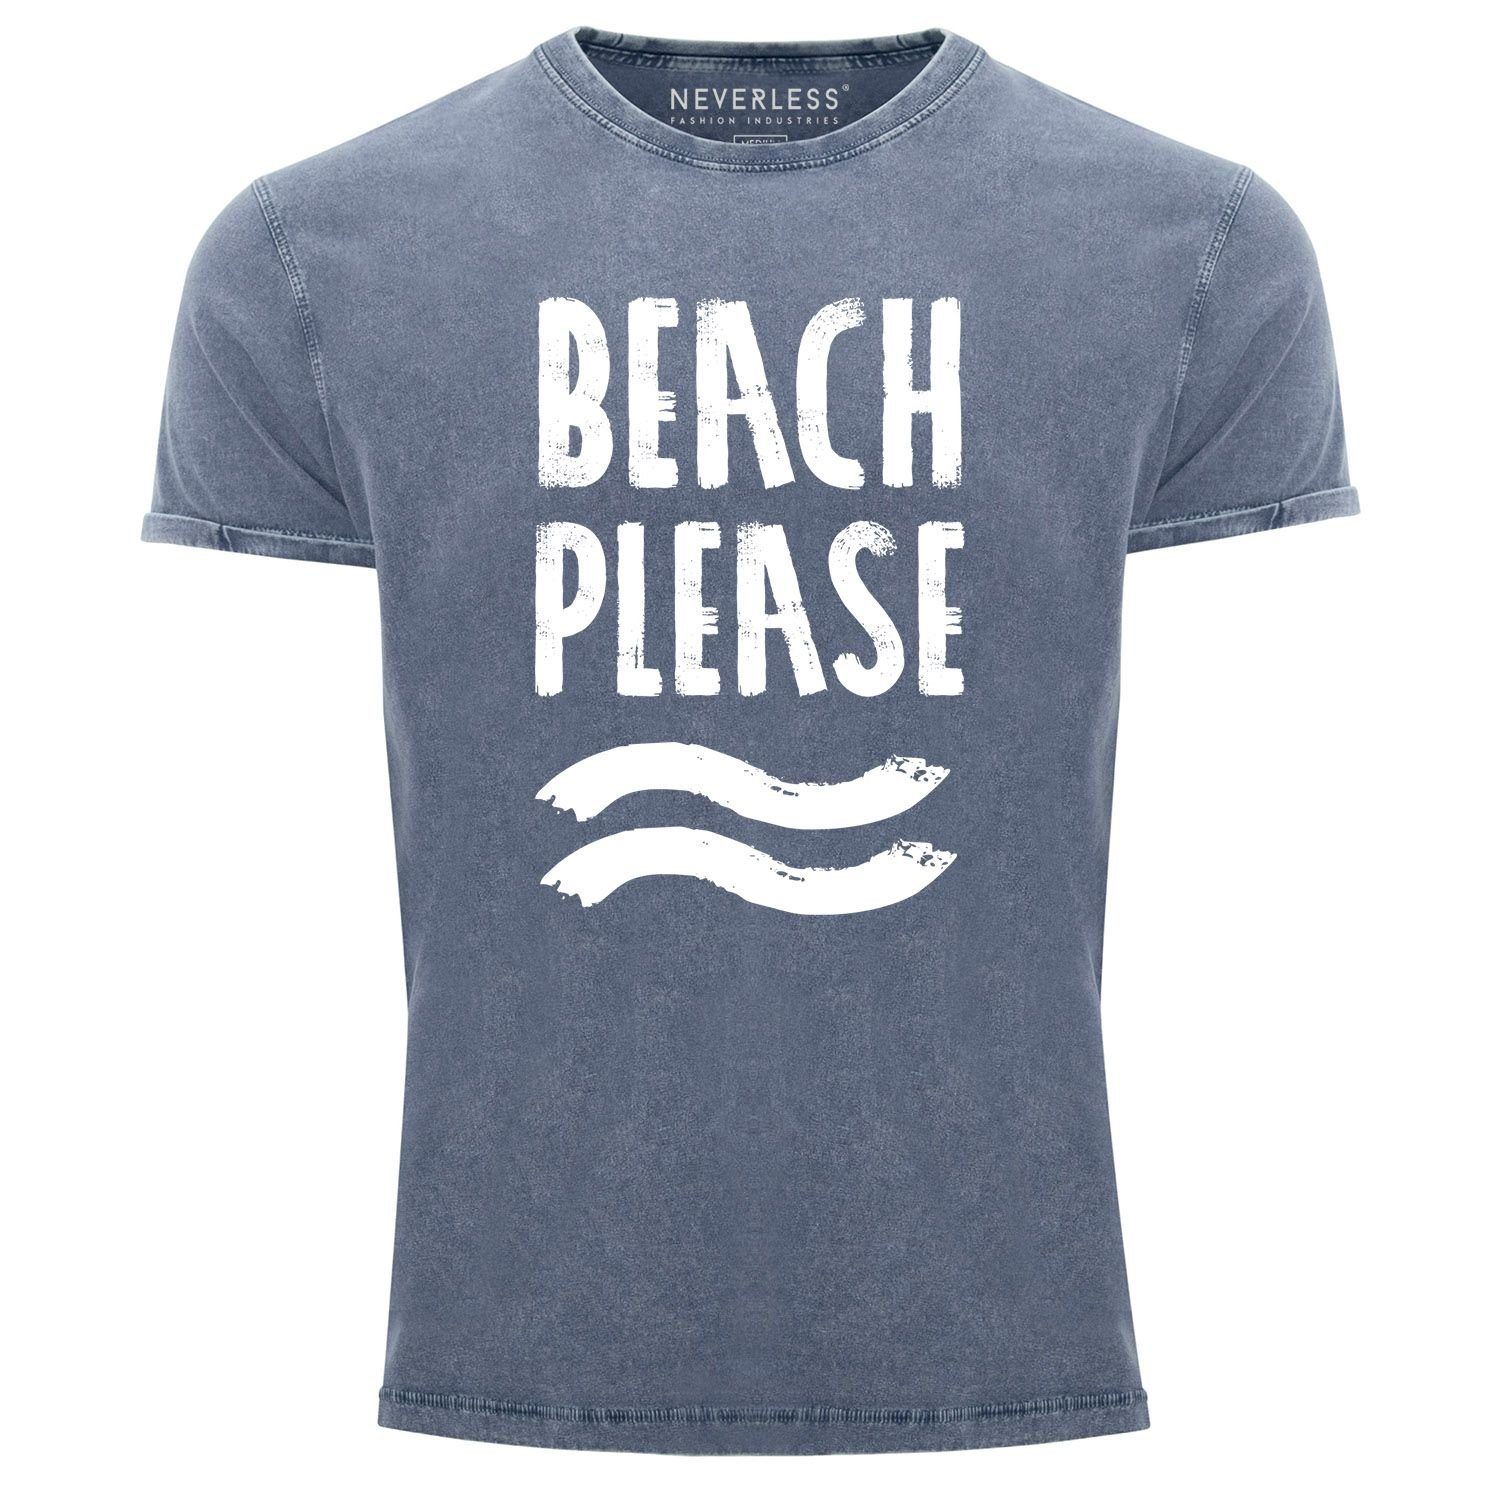 Neverless Print-Shirt Cooles Angesagtes Herren T-Shirt Vintage Shirt Beach Please Urlaub Strand Aufdruck Used Look Slim Fit Neverless® mit Print blau